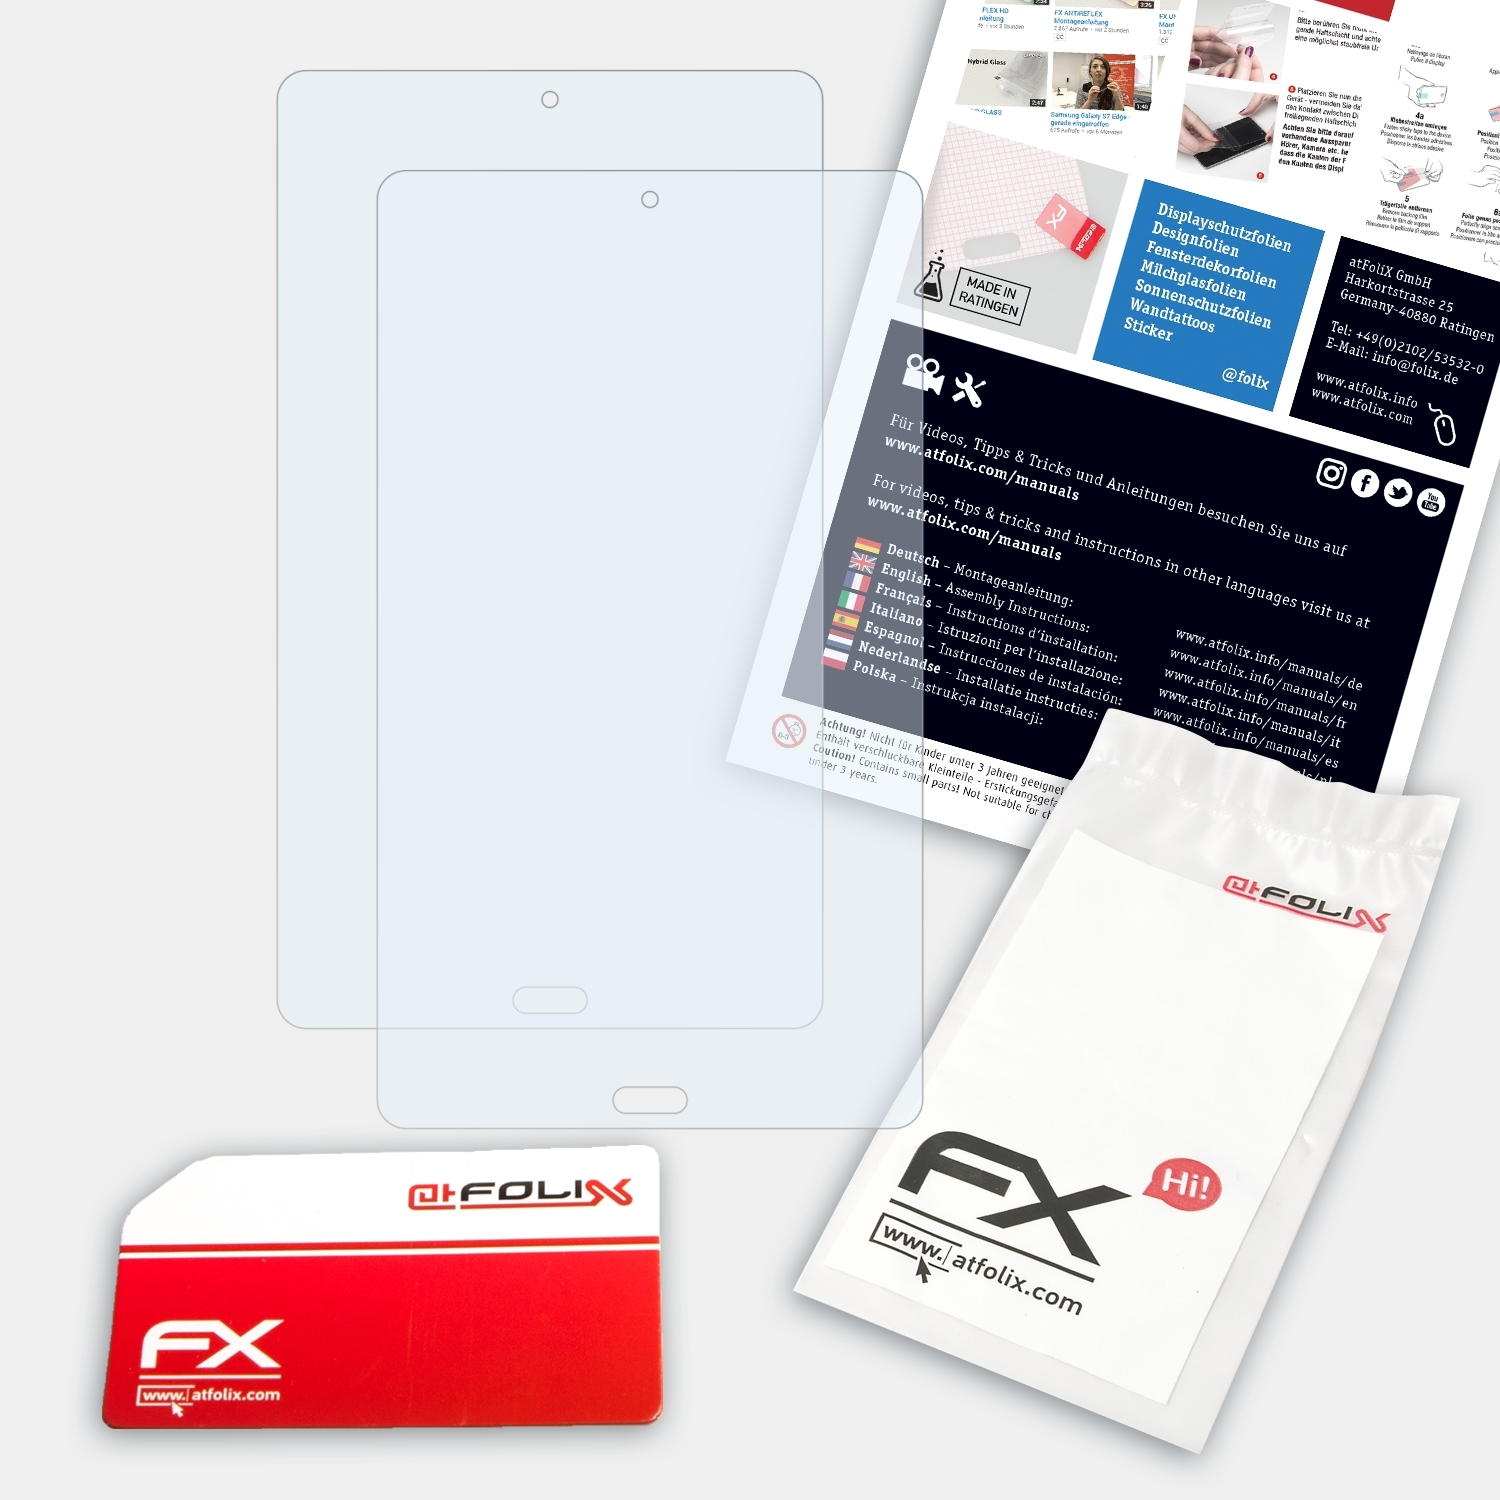 ATFOLIX 2x FX-Clear Huawei Displayschutz(für 8.4) MediaPad M3